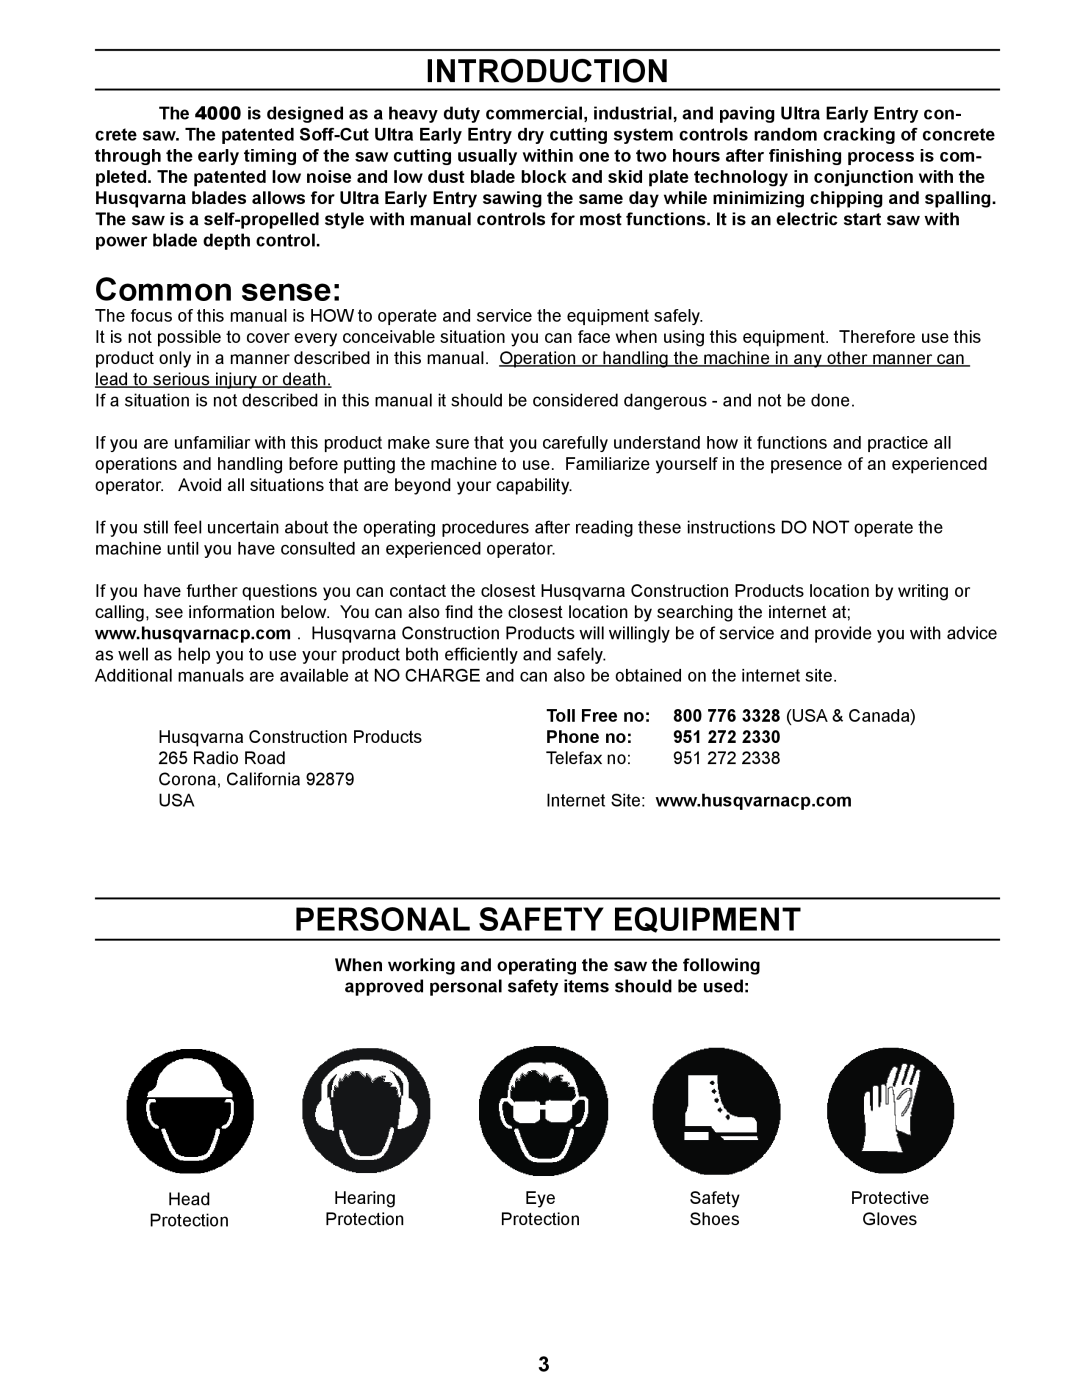 Husqvarna 4000 manuel dutilisation Introduction, Common sense, Personal Safety Equipment 